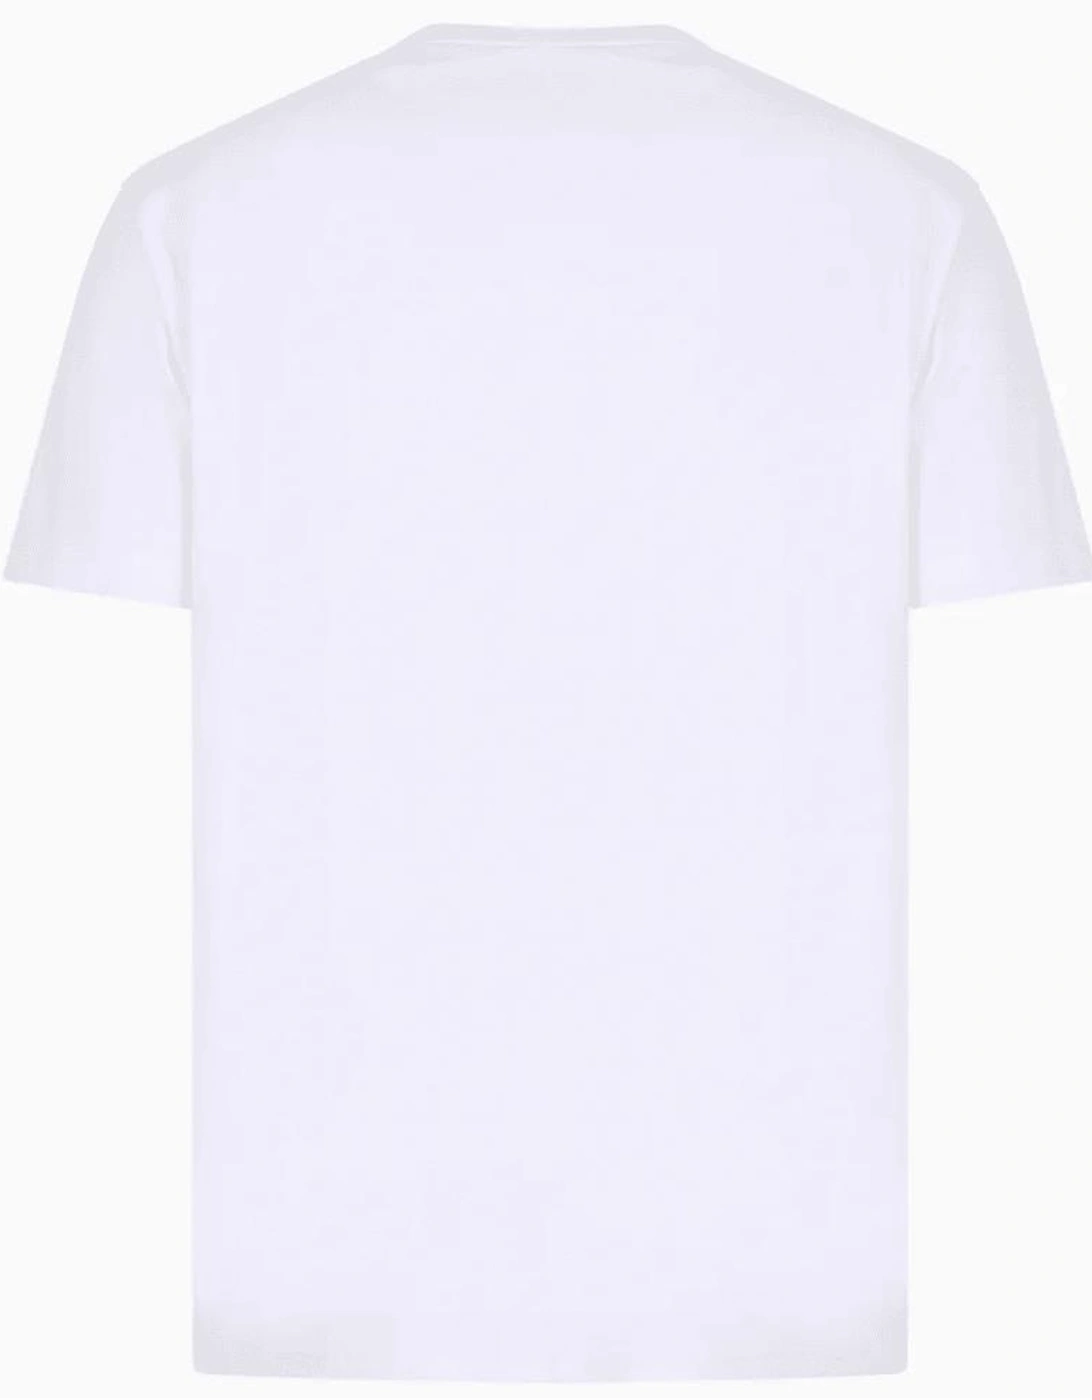 Visibility Logo White T-Shirt